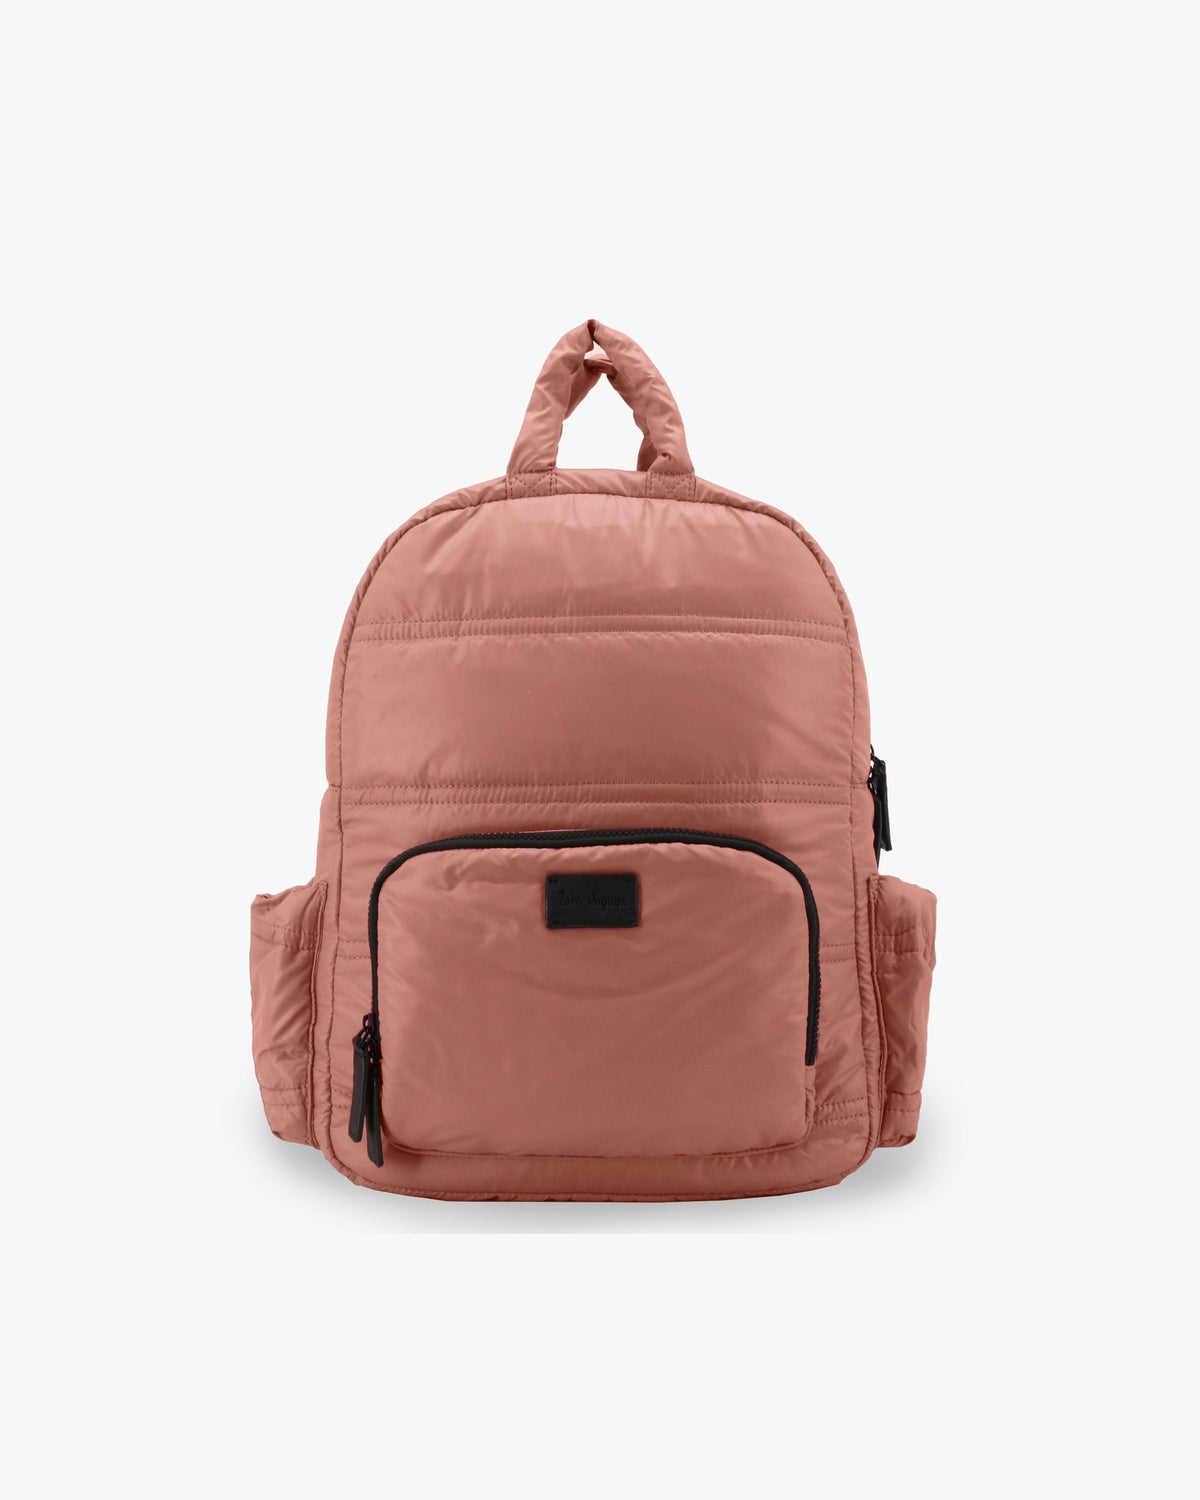 BK718 Backpack Diaper Bag